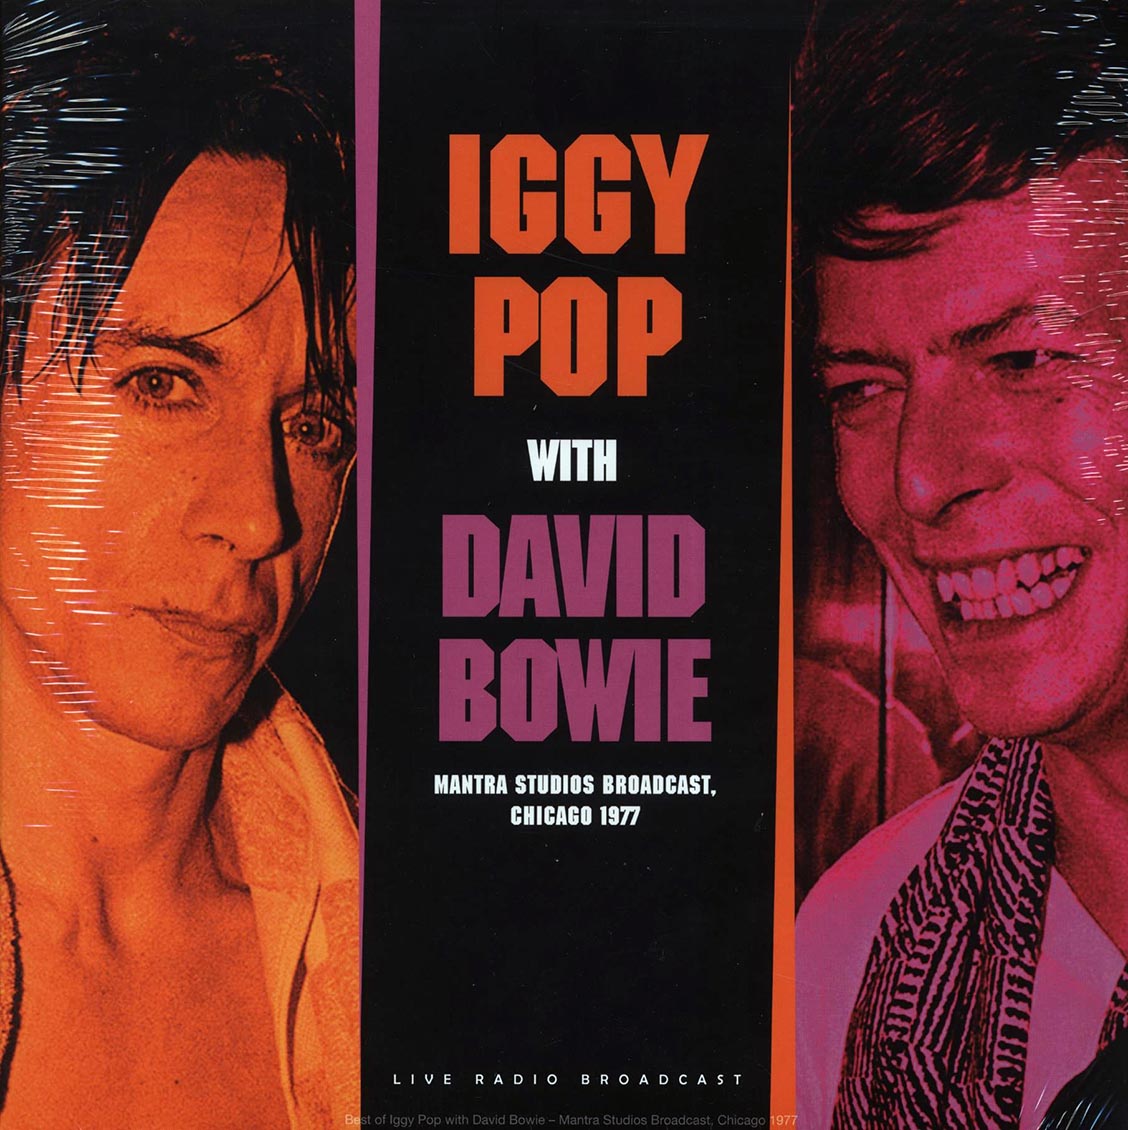 Iggy Pop, David Bowie - Mantra Studios Broadcast, Chicago 1977 - Vinyl LP